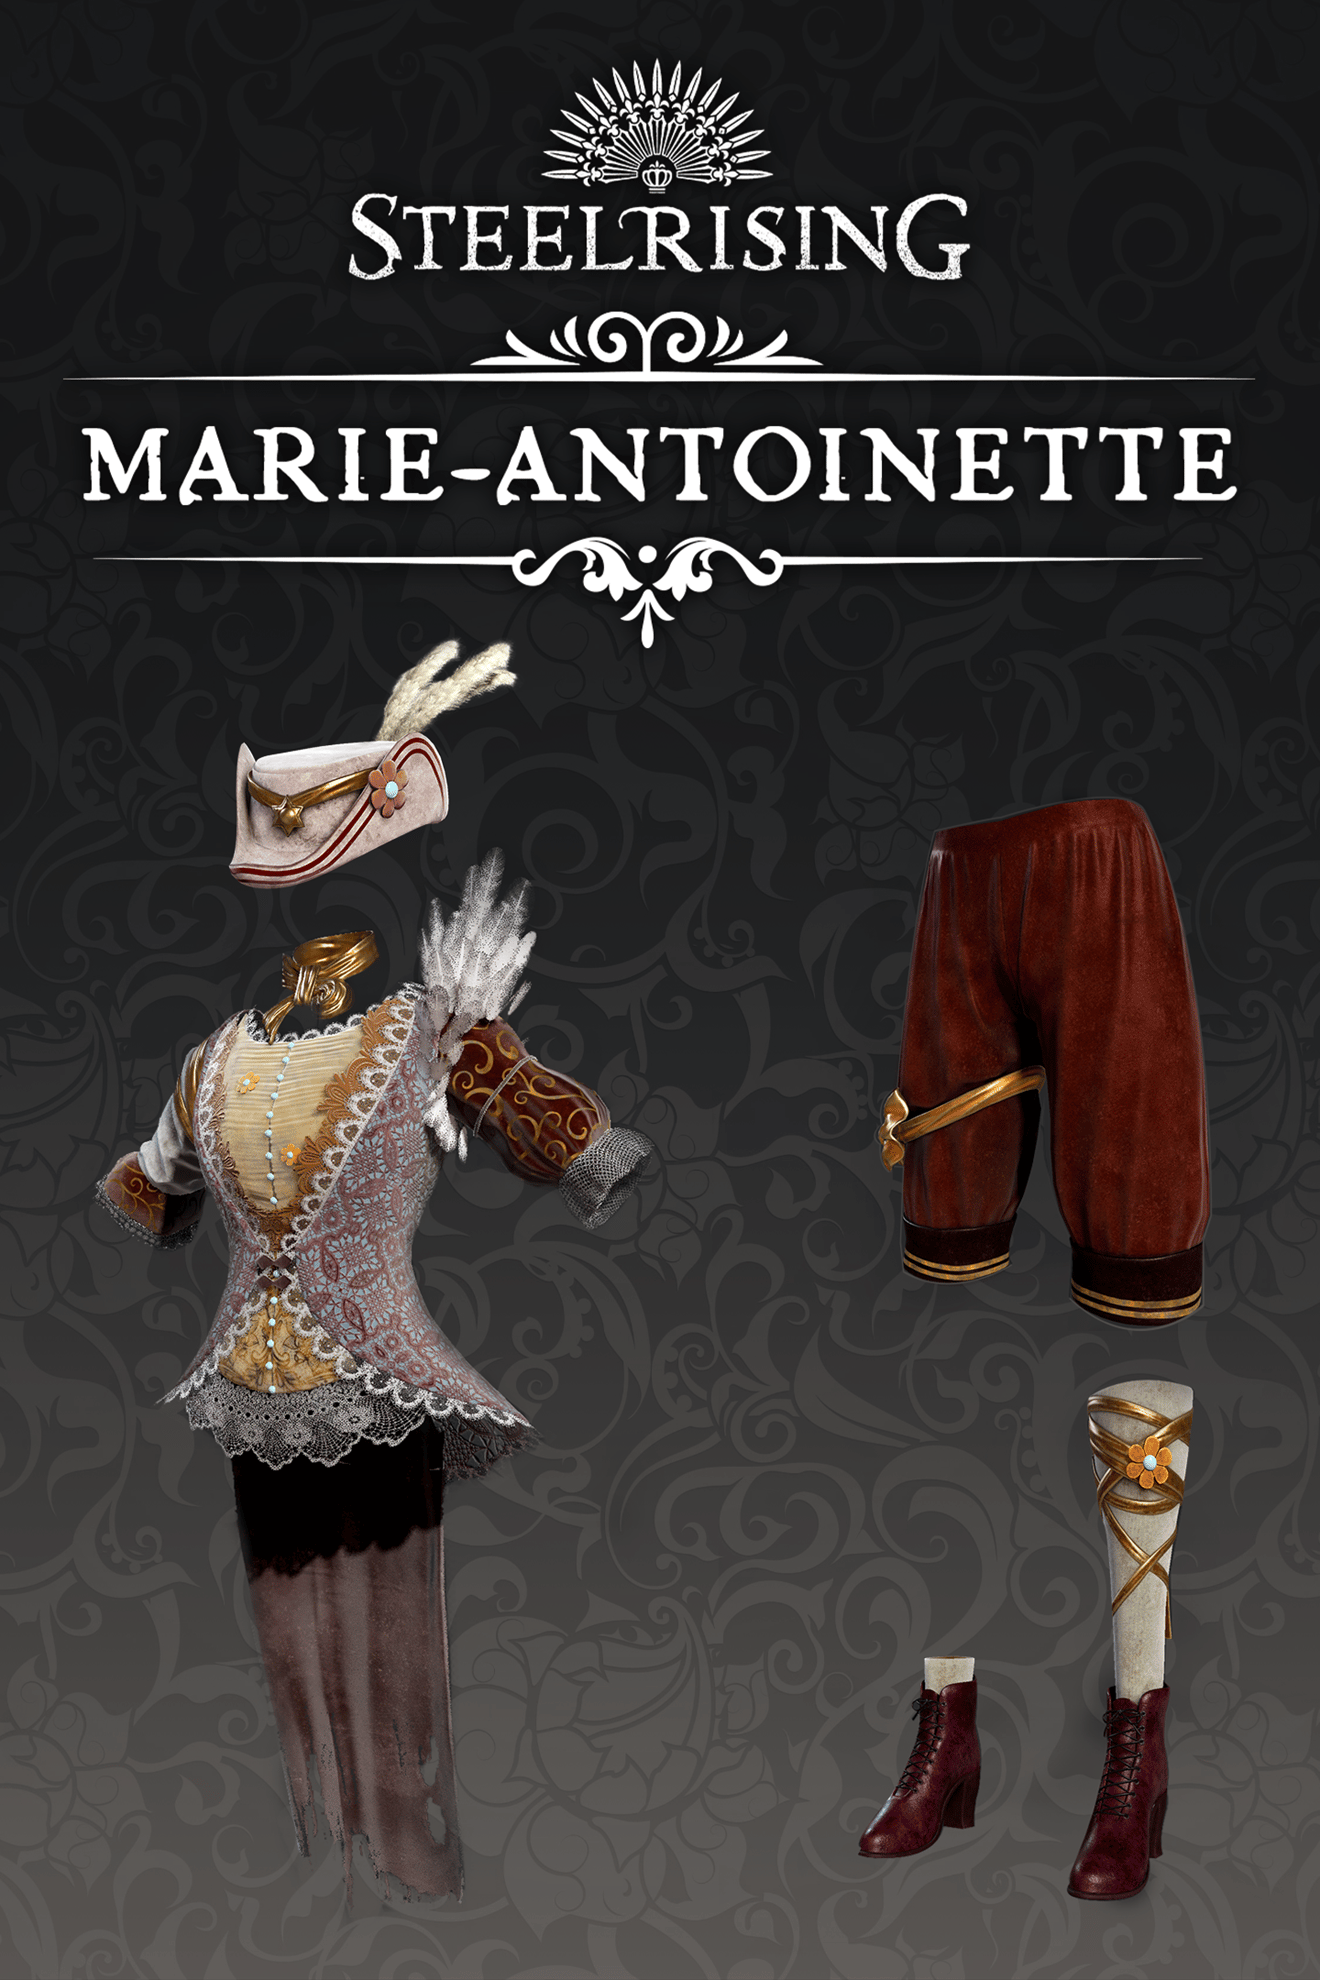 Steelrising - Marie-Antoinette Cosmetic Pack | WW (ca7608ff-340c-4d35-8413-6e800799aa0f)